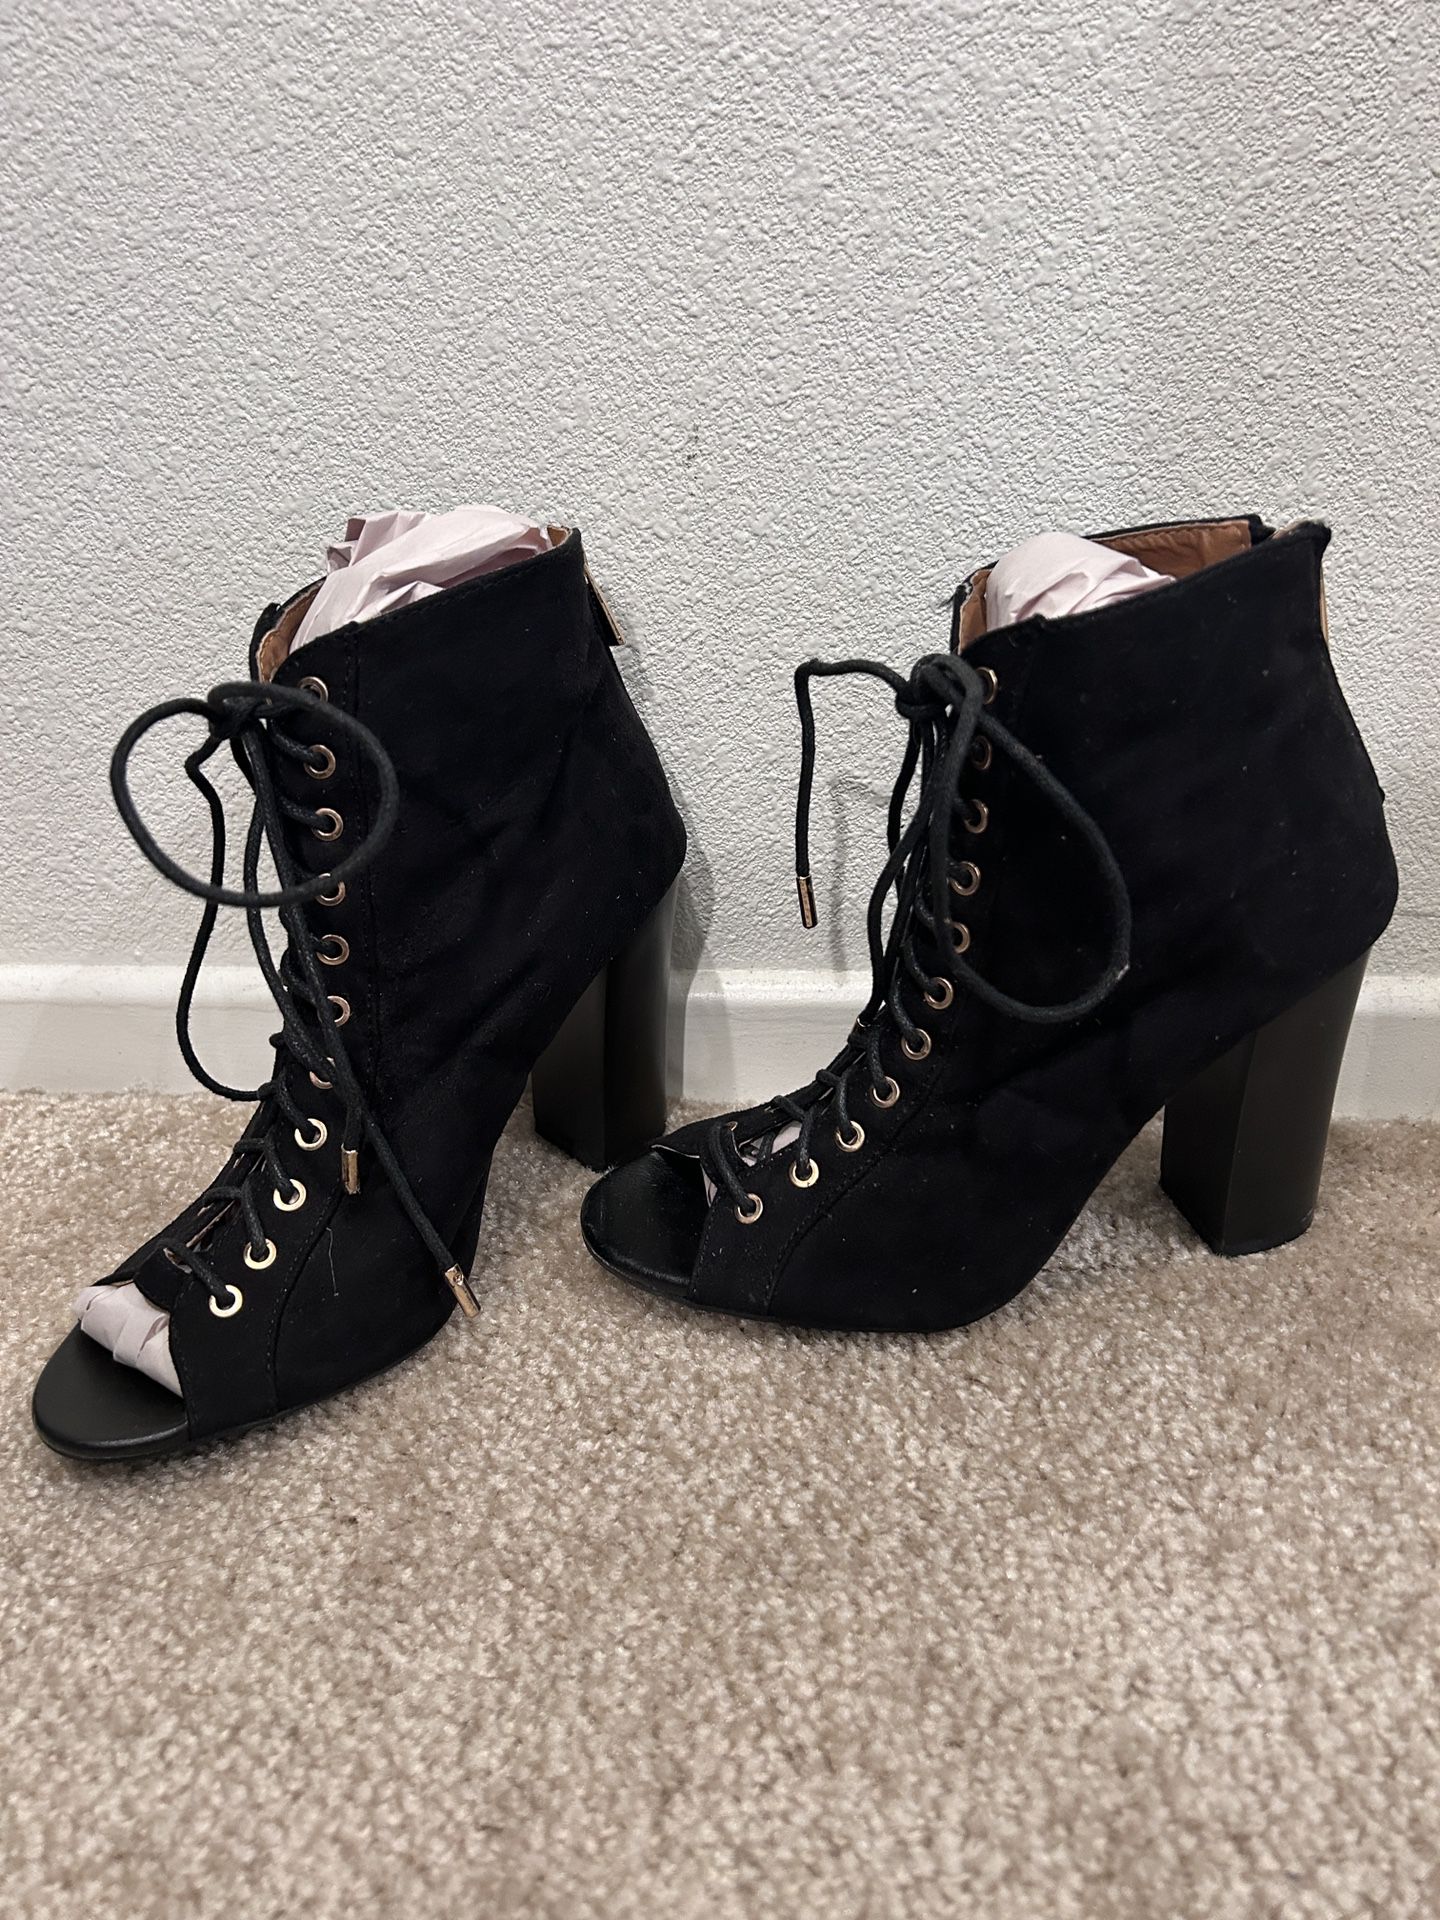 Black Lace-up Heels Size 6.5